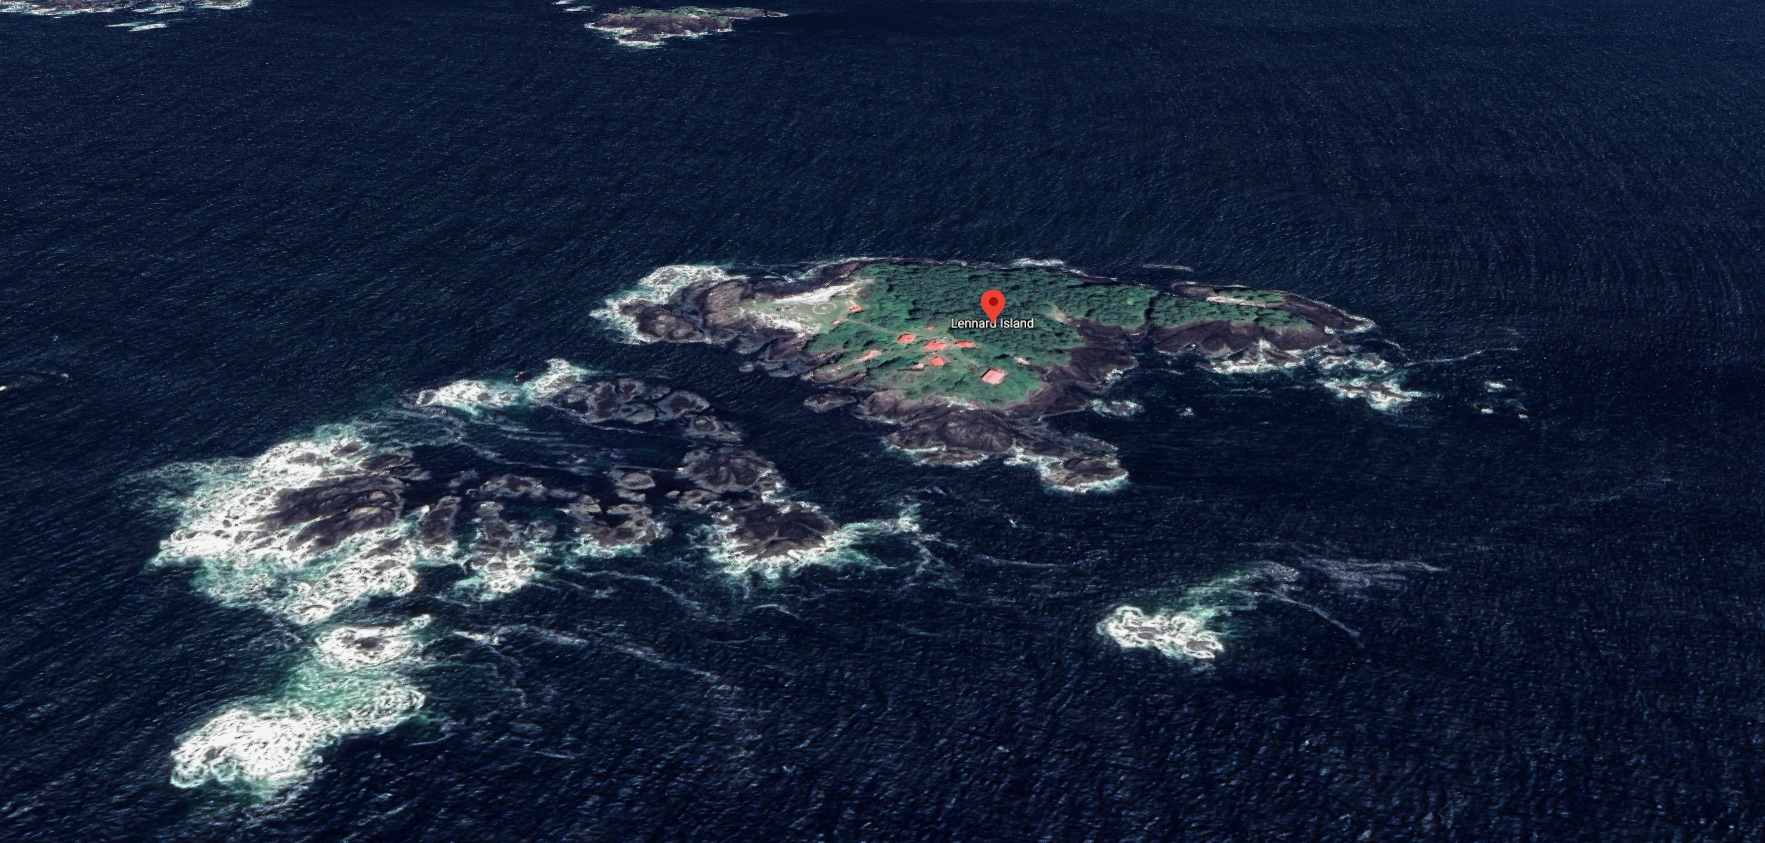 Lennard island